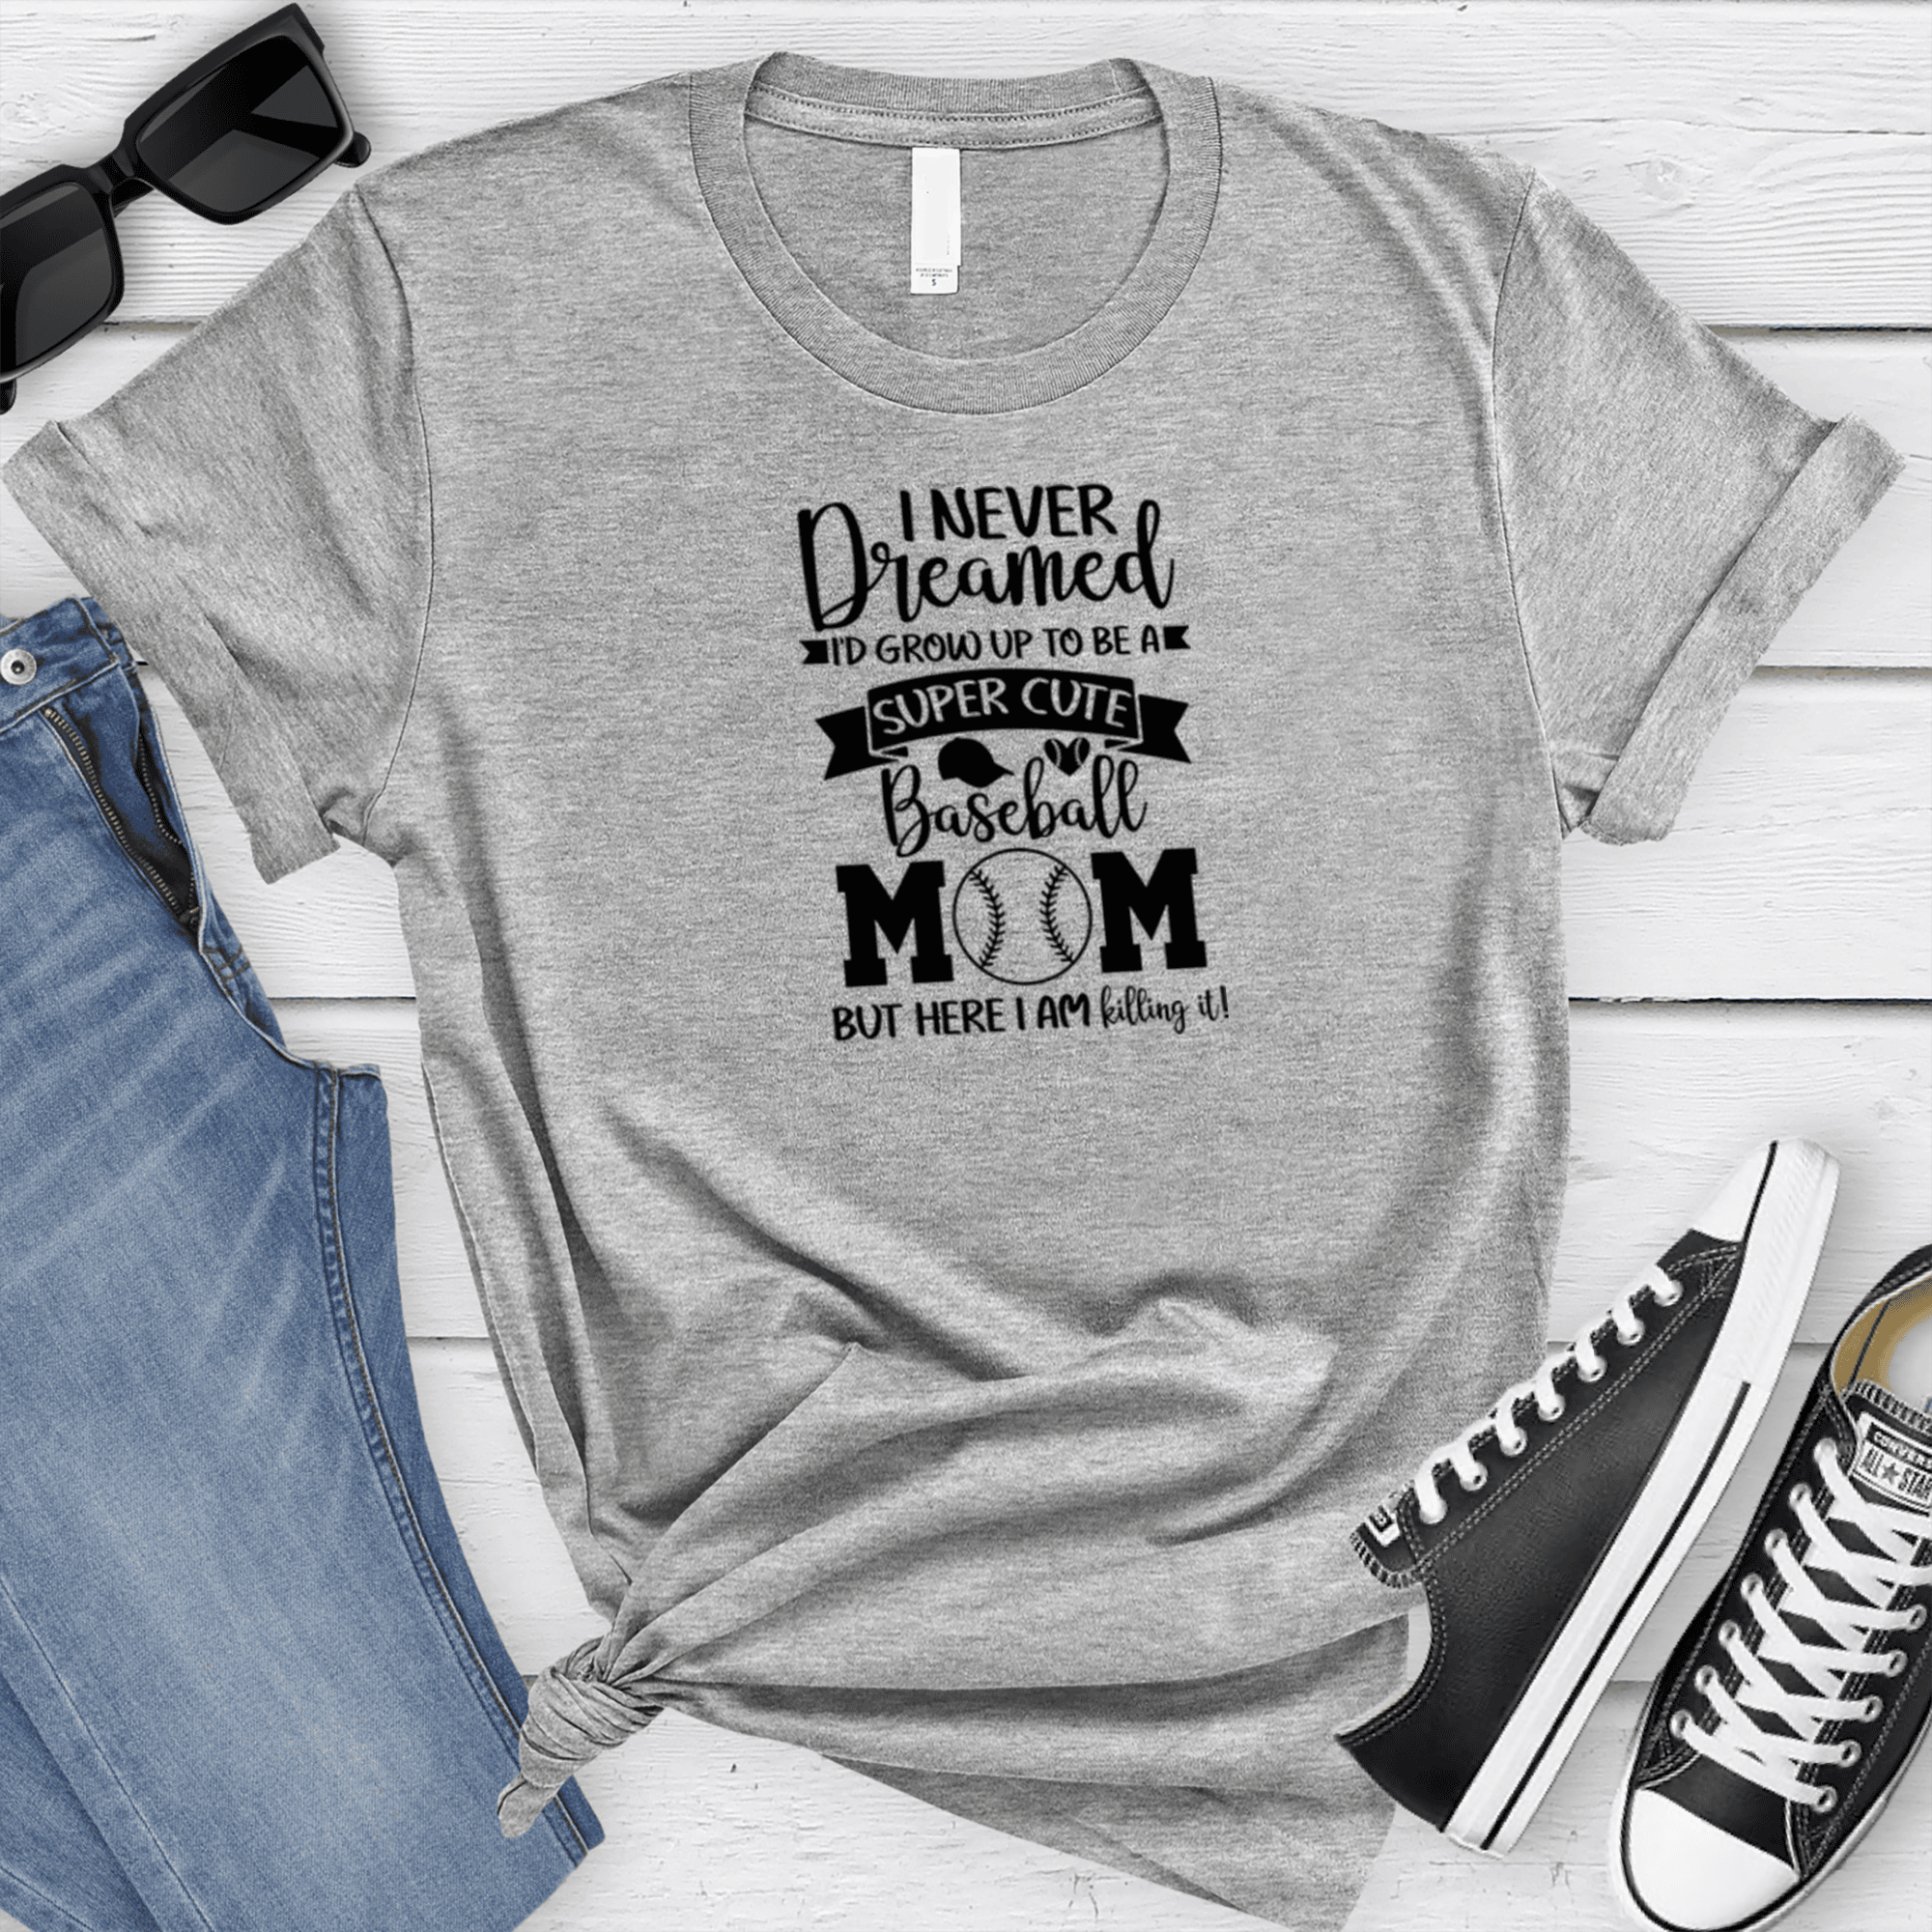 Womens Grey T Shirt with Super-Cute-Baseball-Mom design